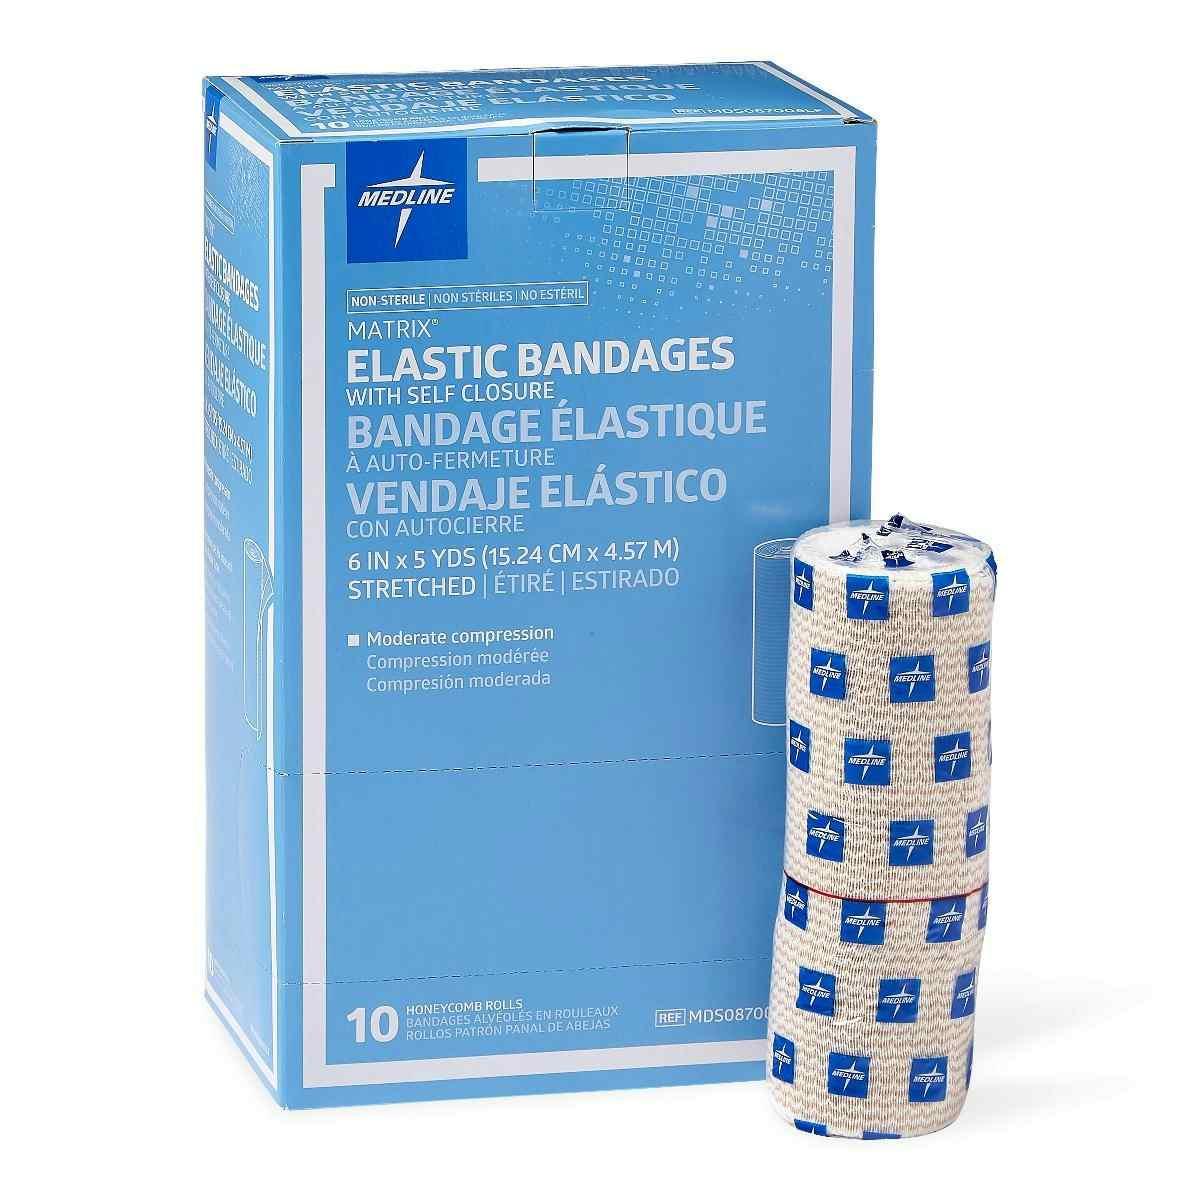 Medline Matrix Elastic Bandage with Self-Closure, MDS087006LFZ, 6" x 5 yd. - Box of 10